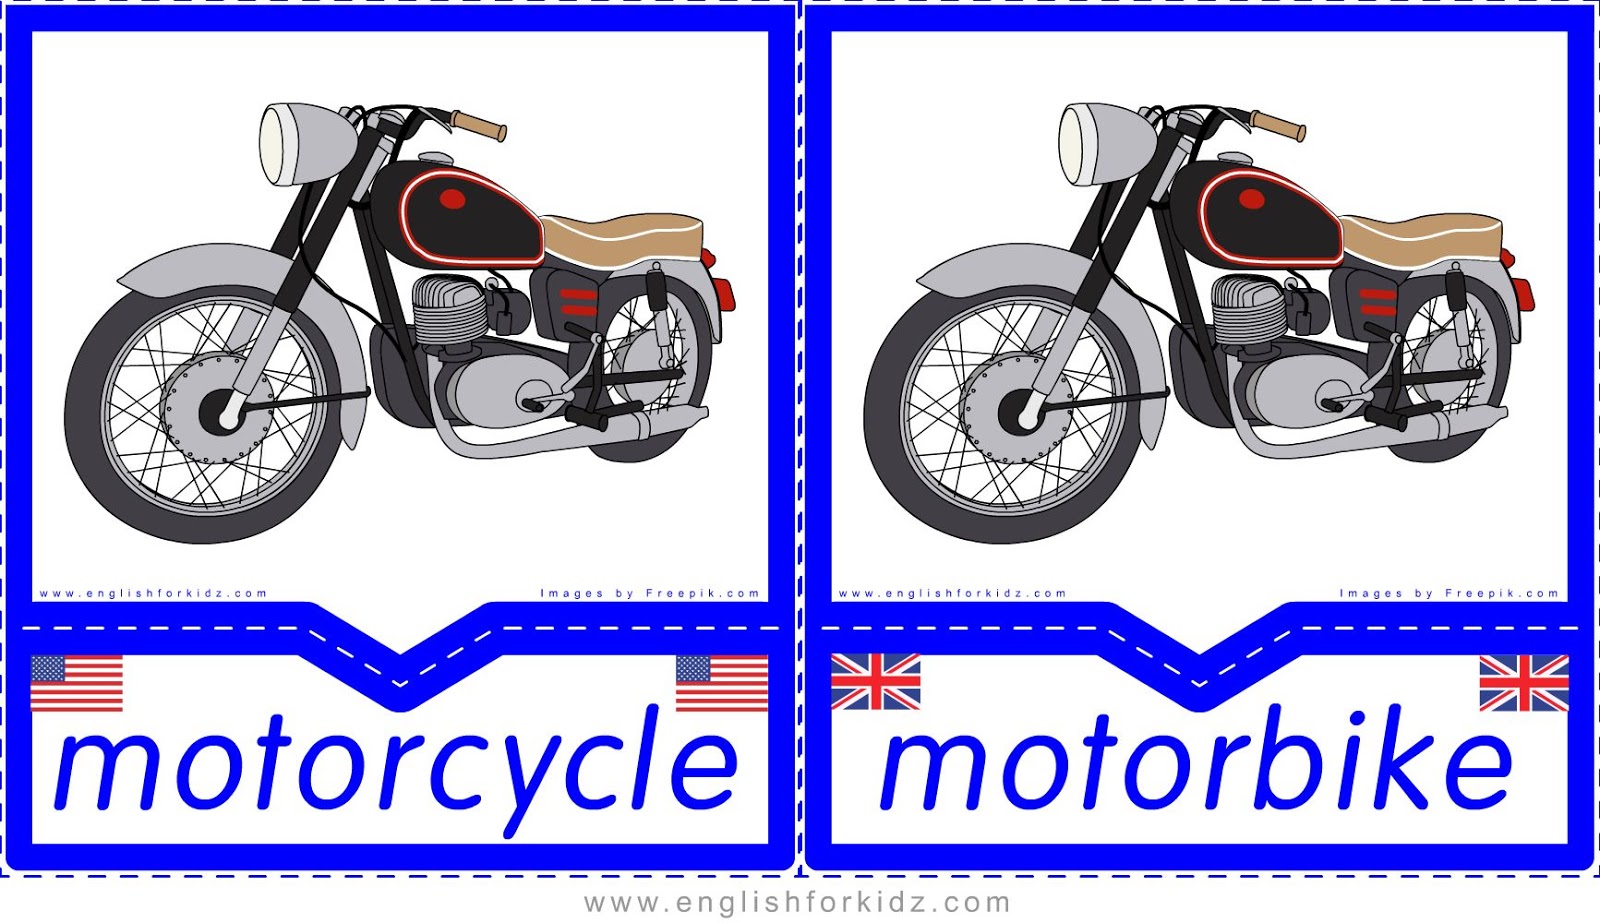 Байки на английском. Мотоцикл по английскому. Мотоцикл на англ. Загадка про мотоцикл. Английские мотоциклы.